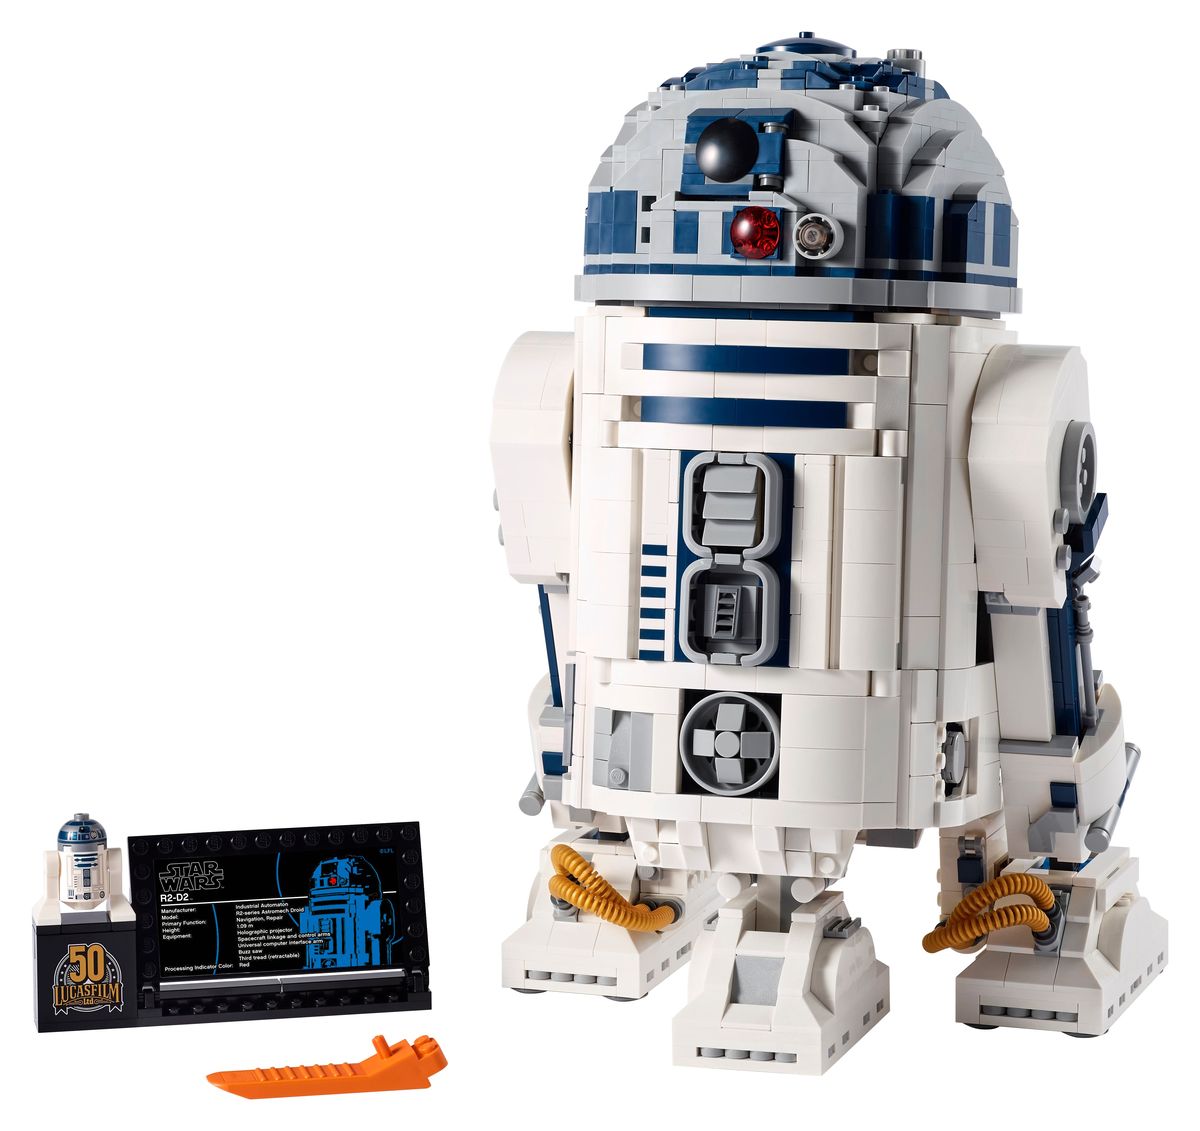 Star Wars: LEGO เปิดตัวชุด R2-D2 ใหม่ที่น่าประทับใจ